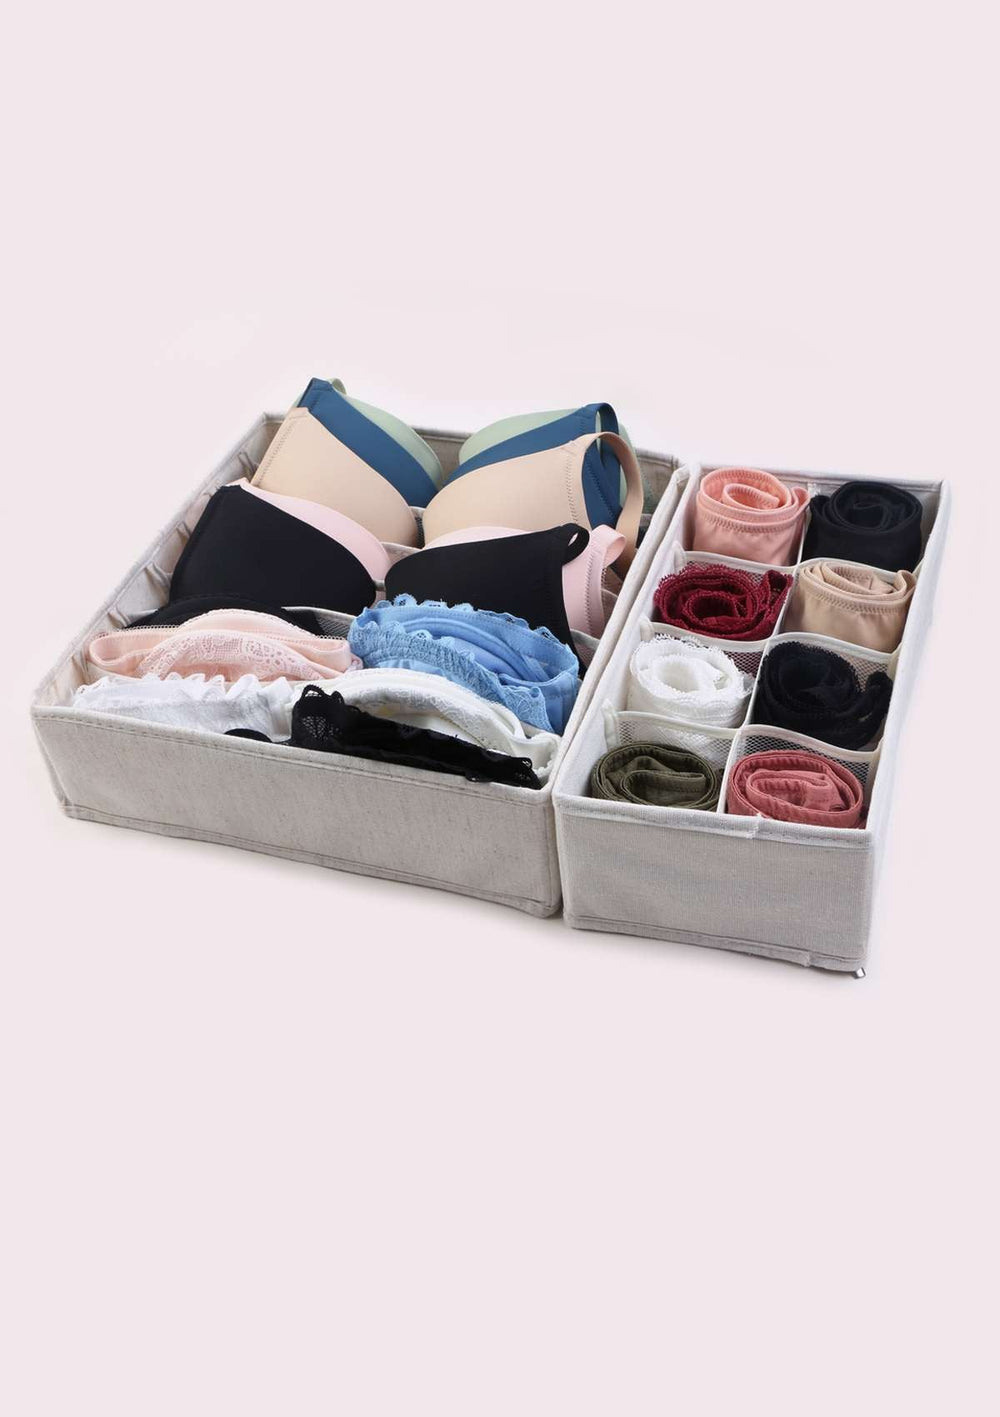 Bra & Underwear Organizer Review: No More Messy Drawers